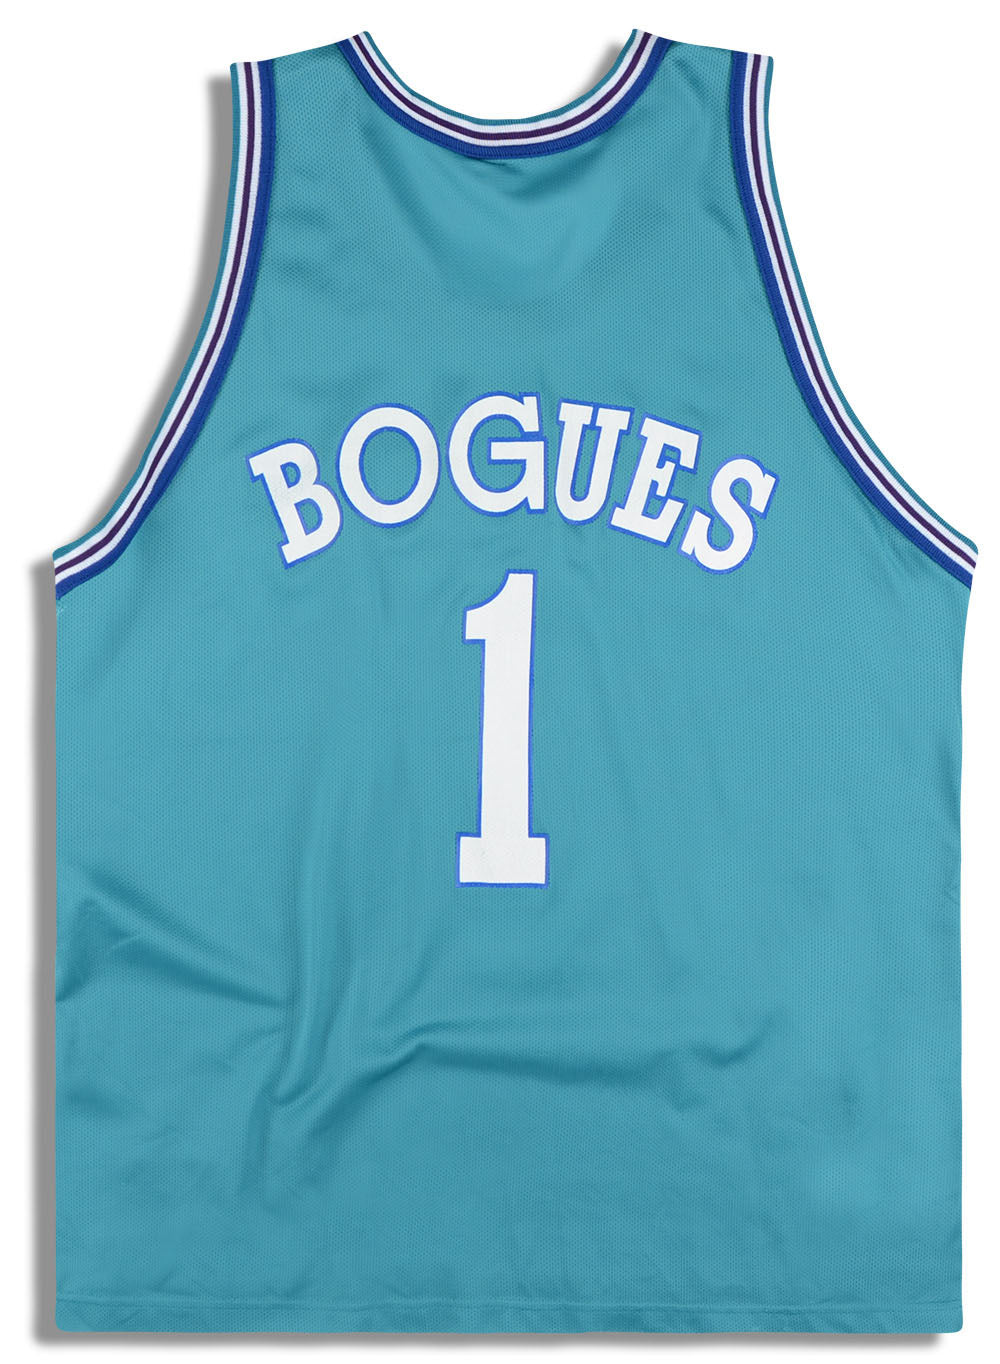 Vintage Nike NBA Toronto Raptors Muggsy Bogues Basketball Jersey